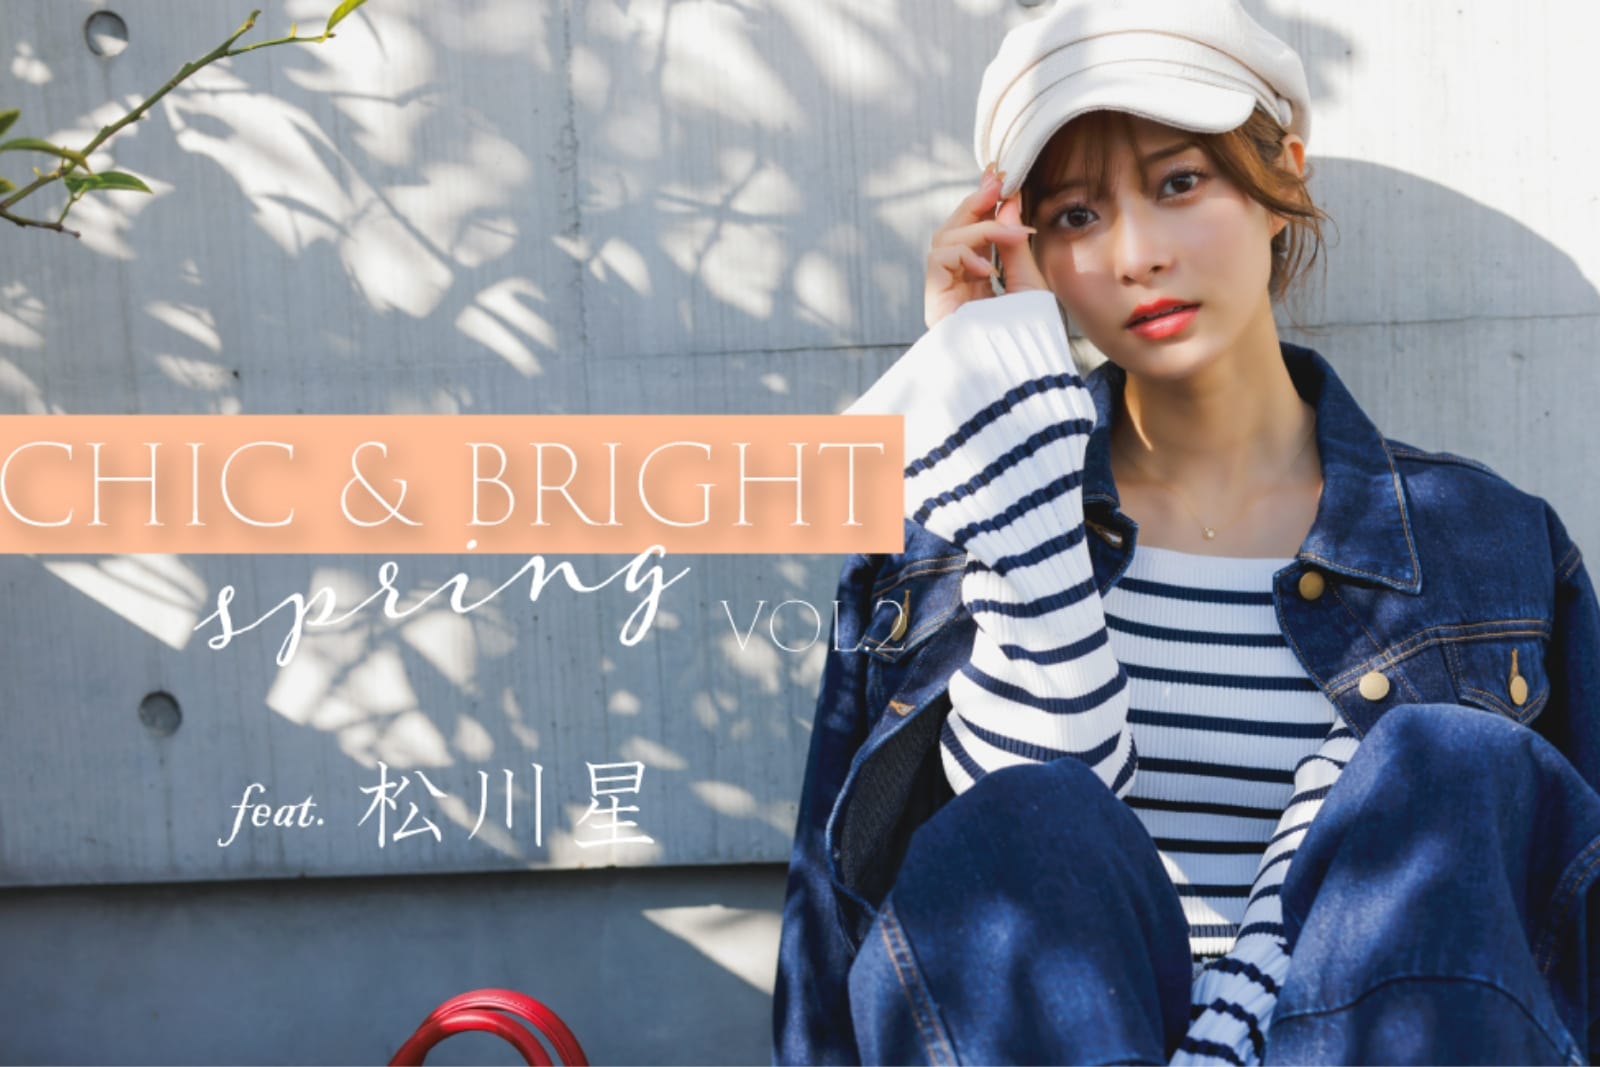 CHIC & BRIGHT SPRING vol.2 feat.松川星